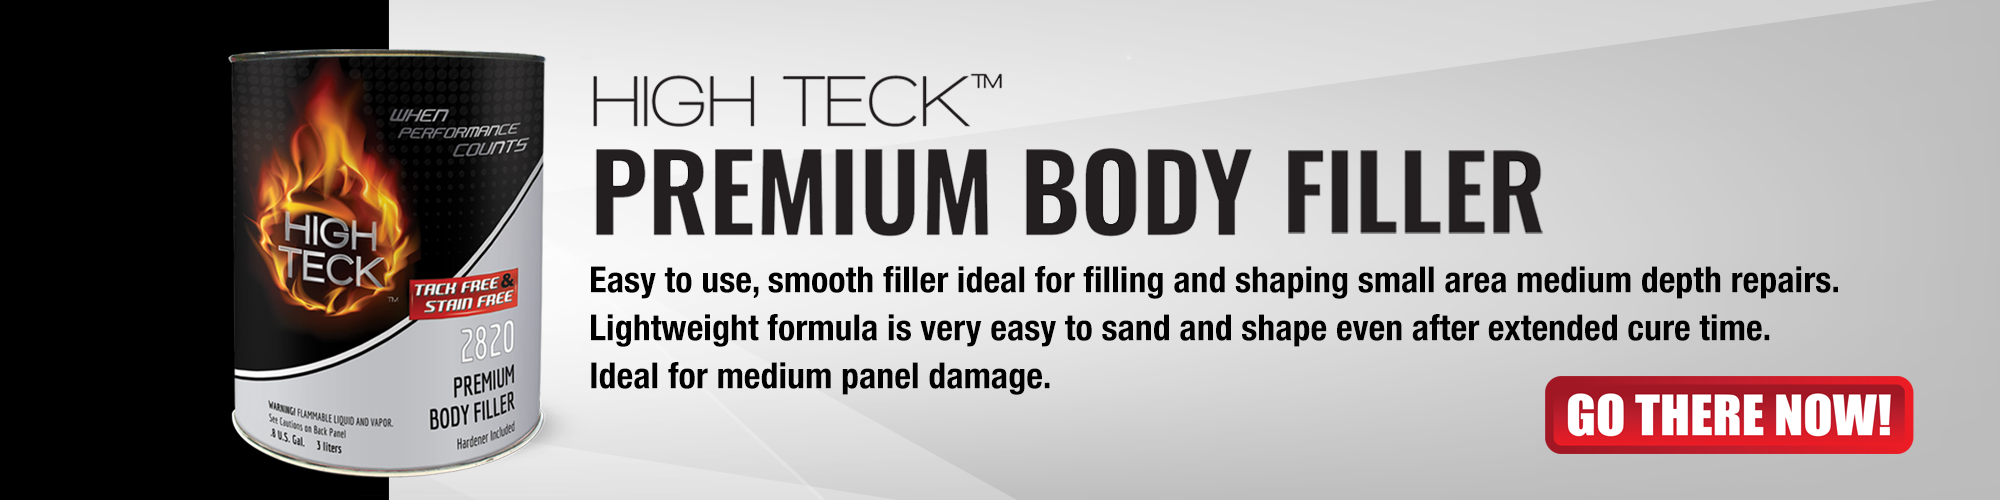 High Teck Premium Body Filler